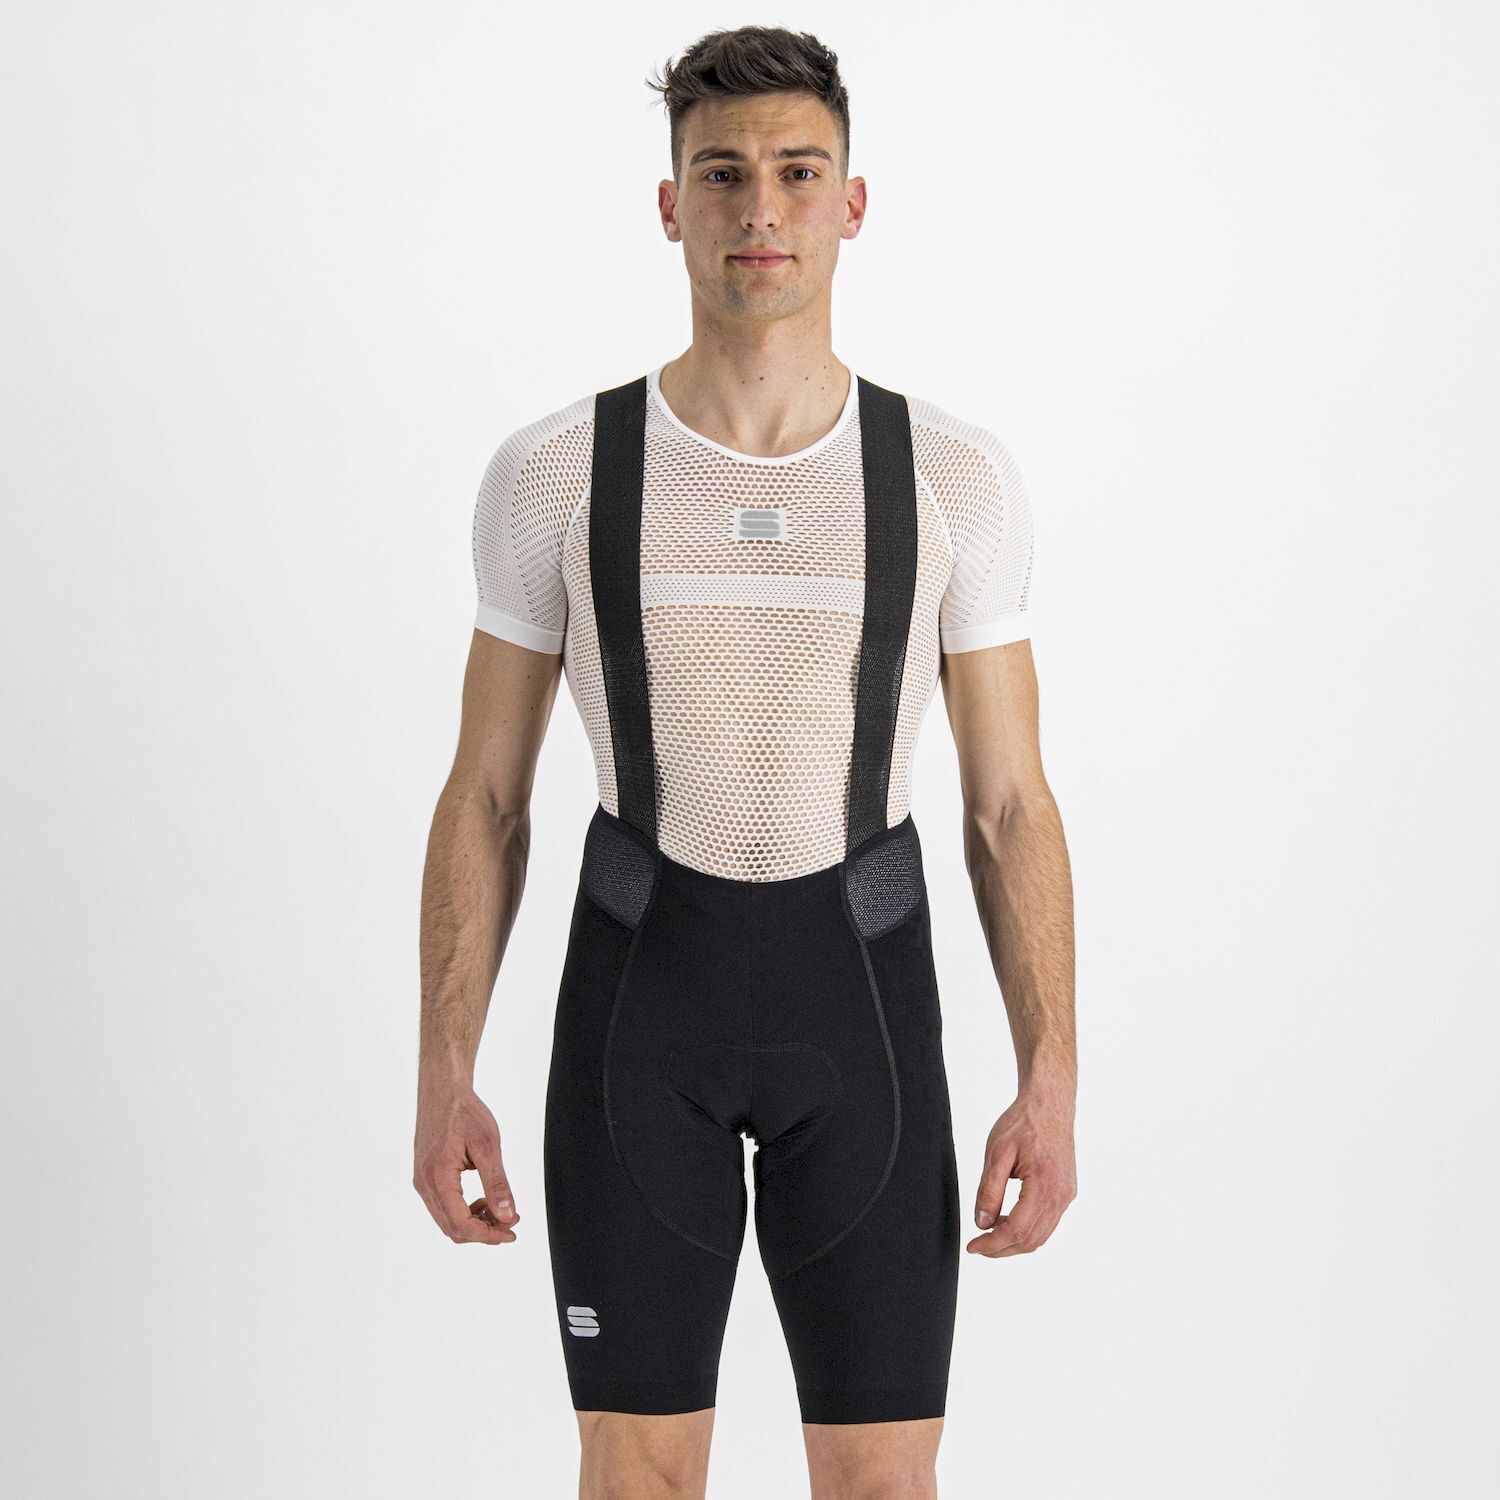 Sportful Total Comfort - Cycling shorts - Men's